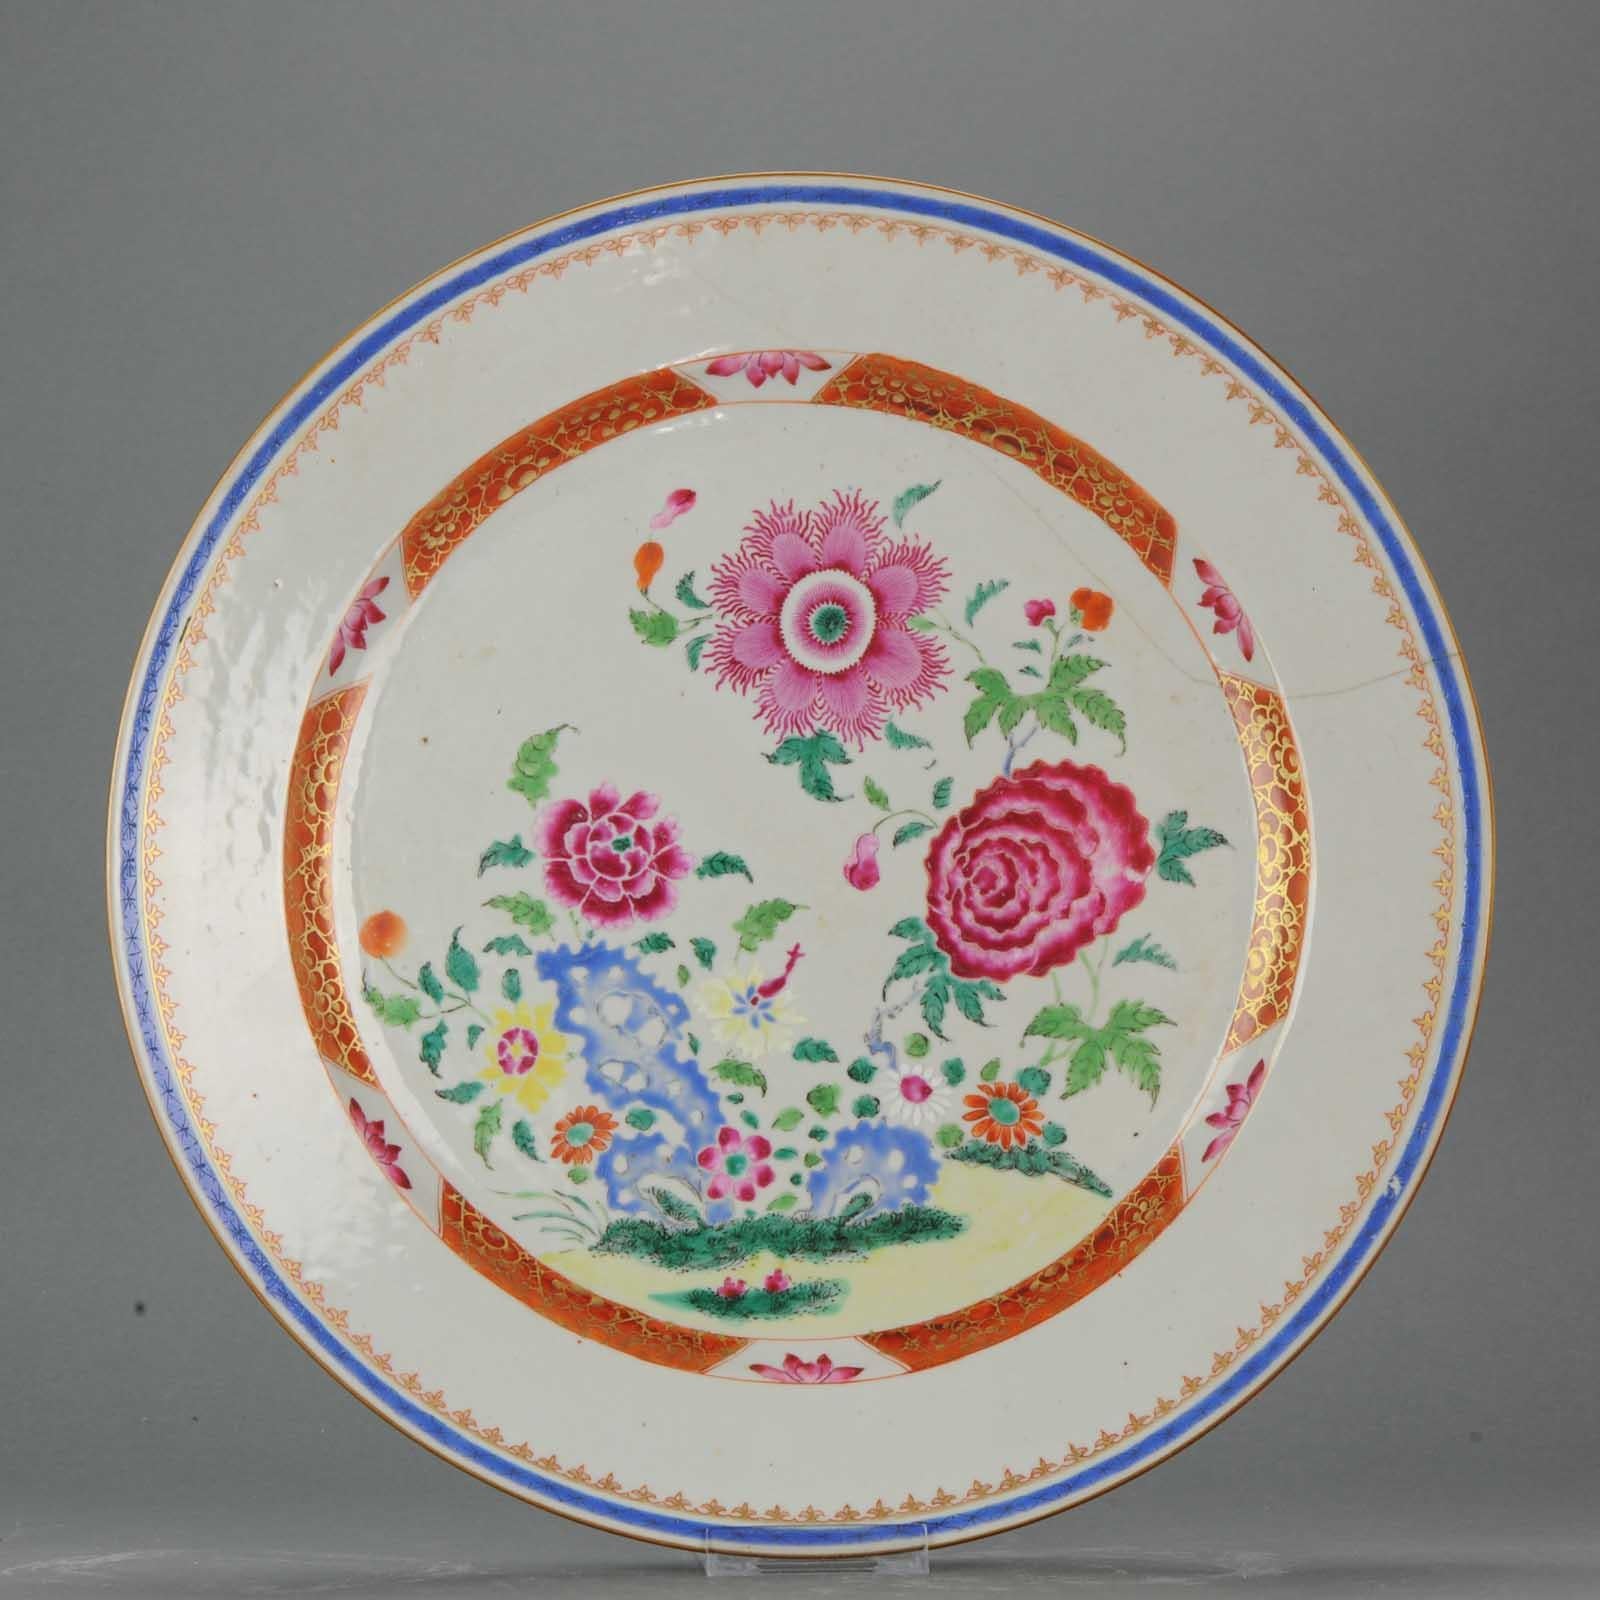 china plates on wall